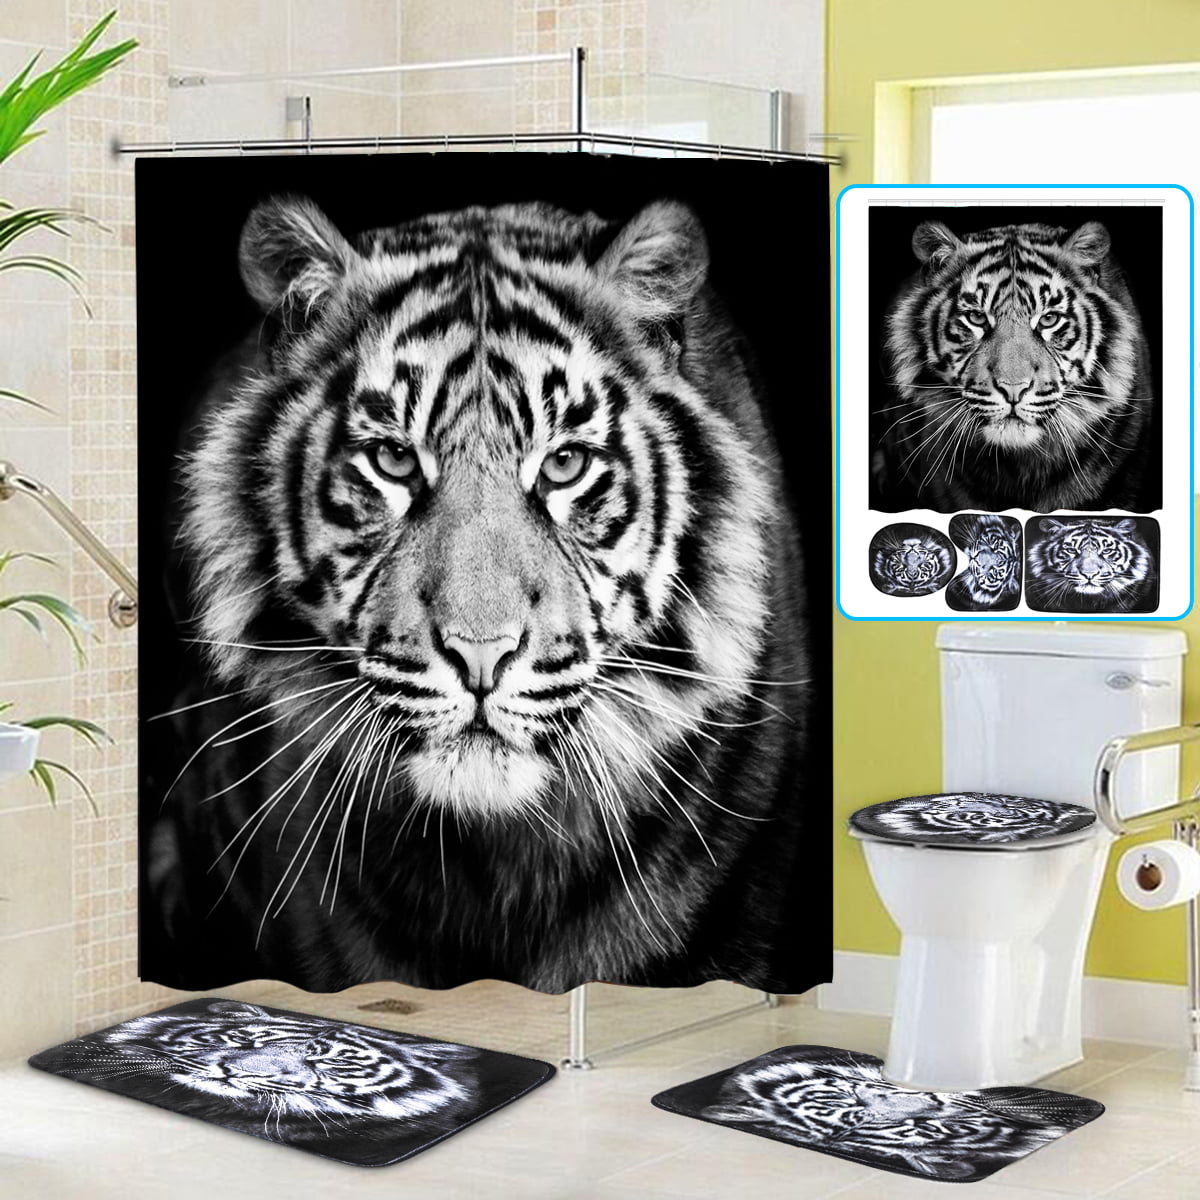 Tiger Bath Mat Toilet Cover Rugs Shower Curtain Black Bathroom Decor 